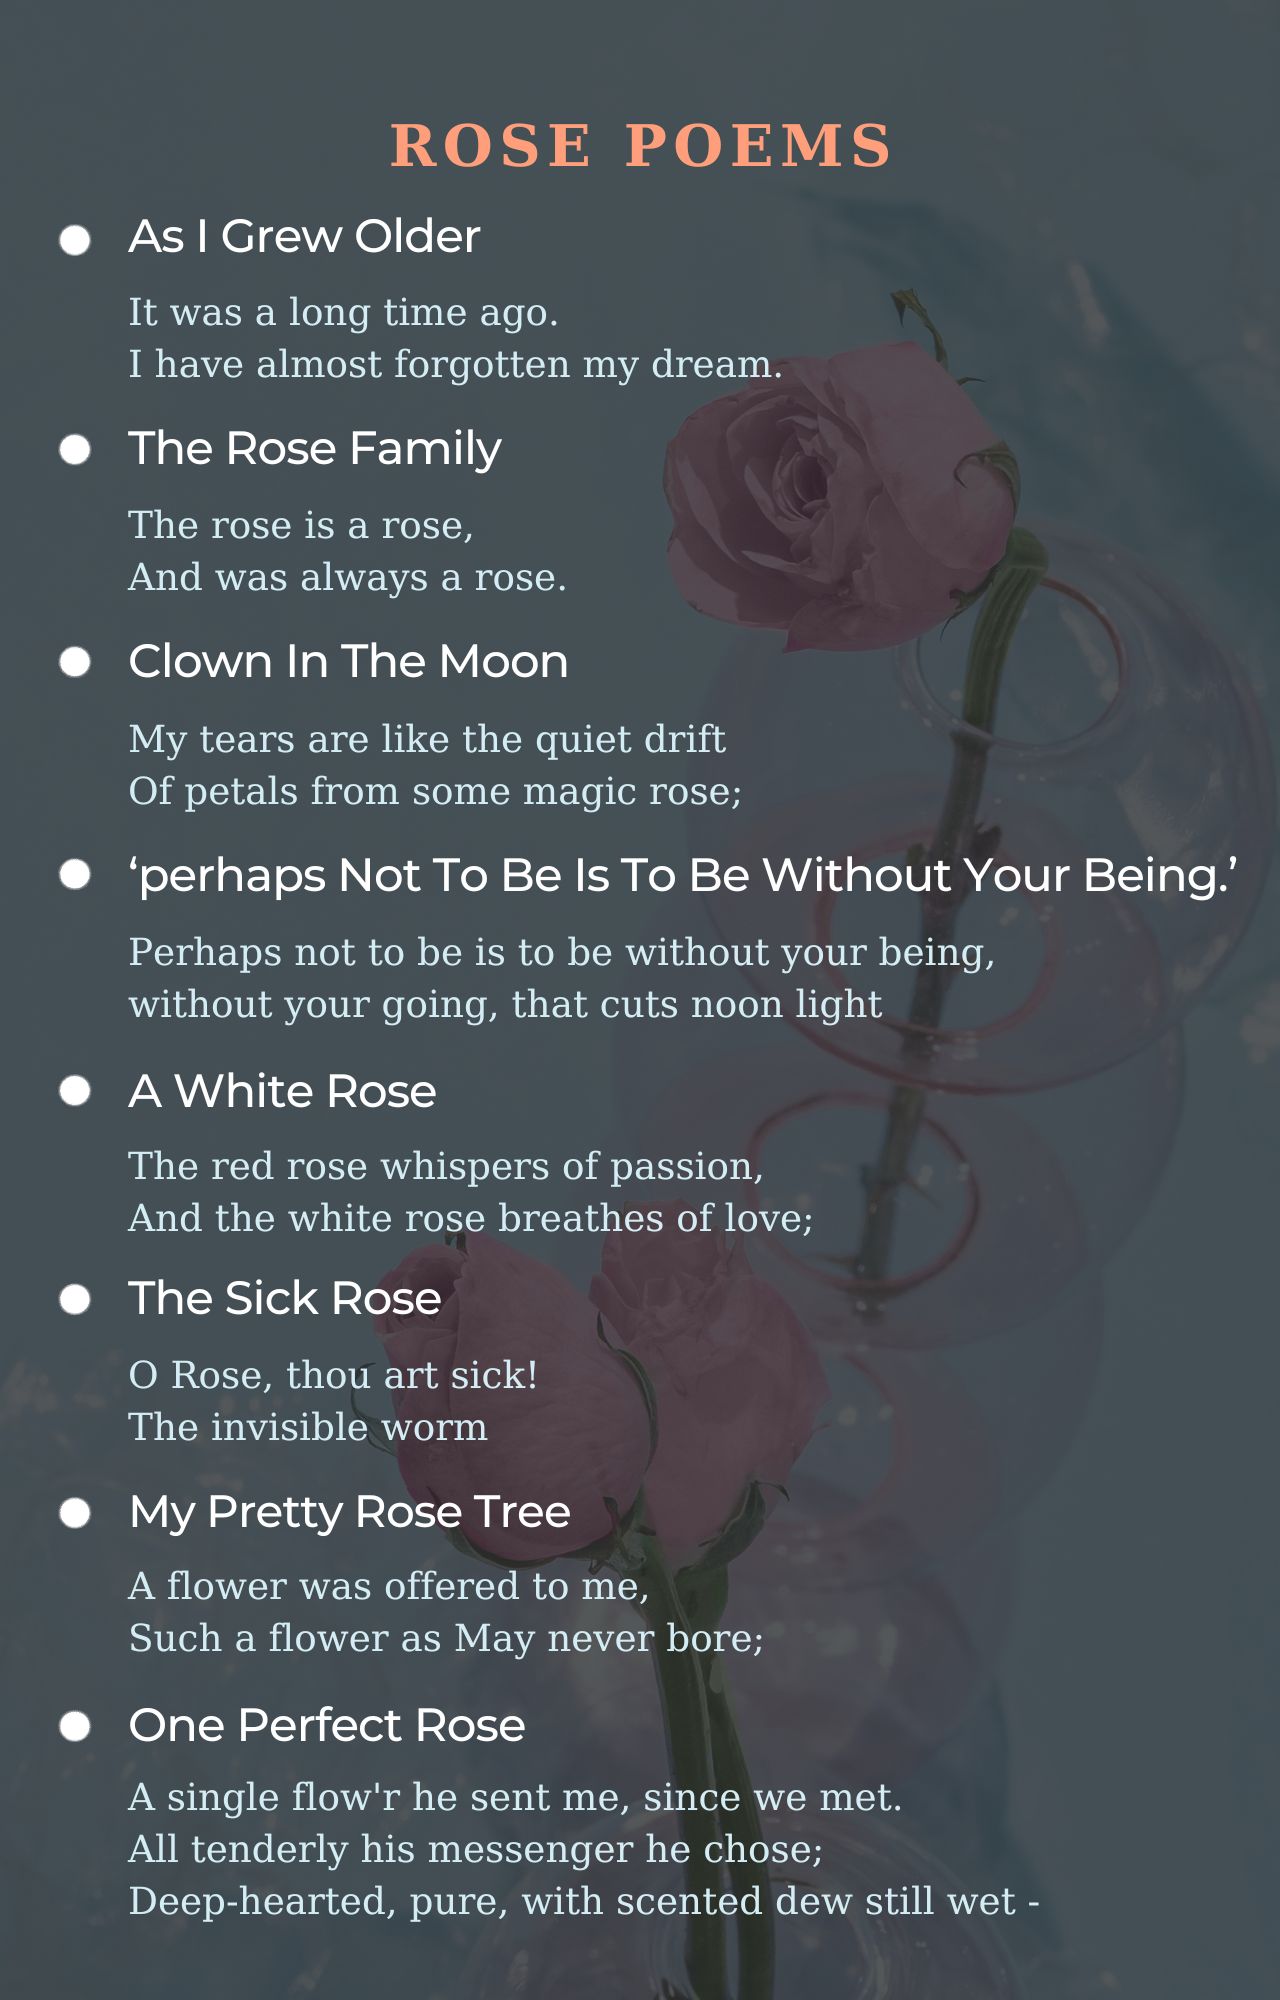 the sick rose poem